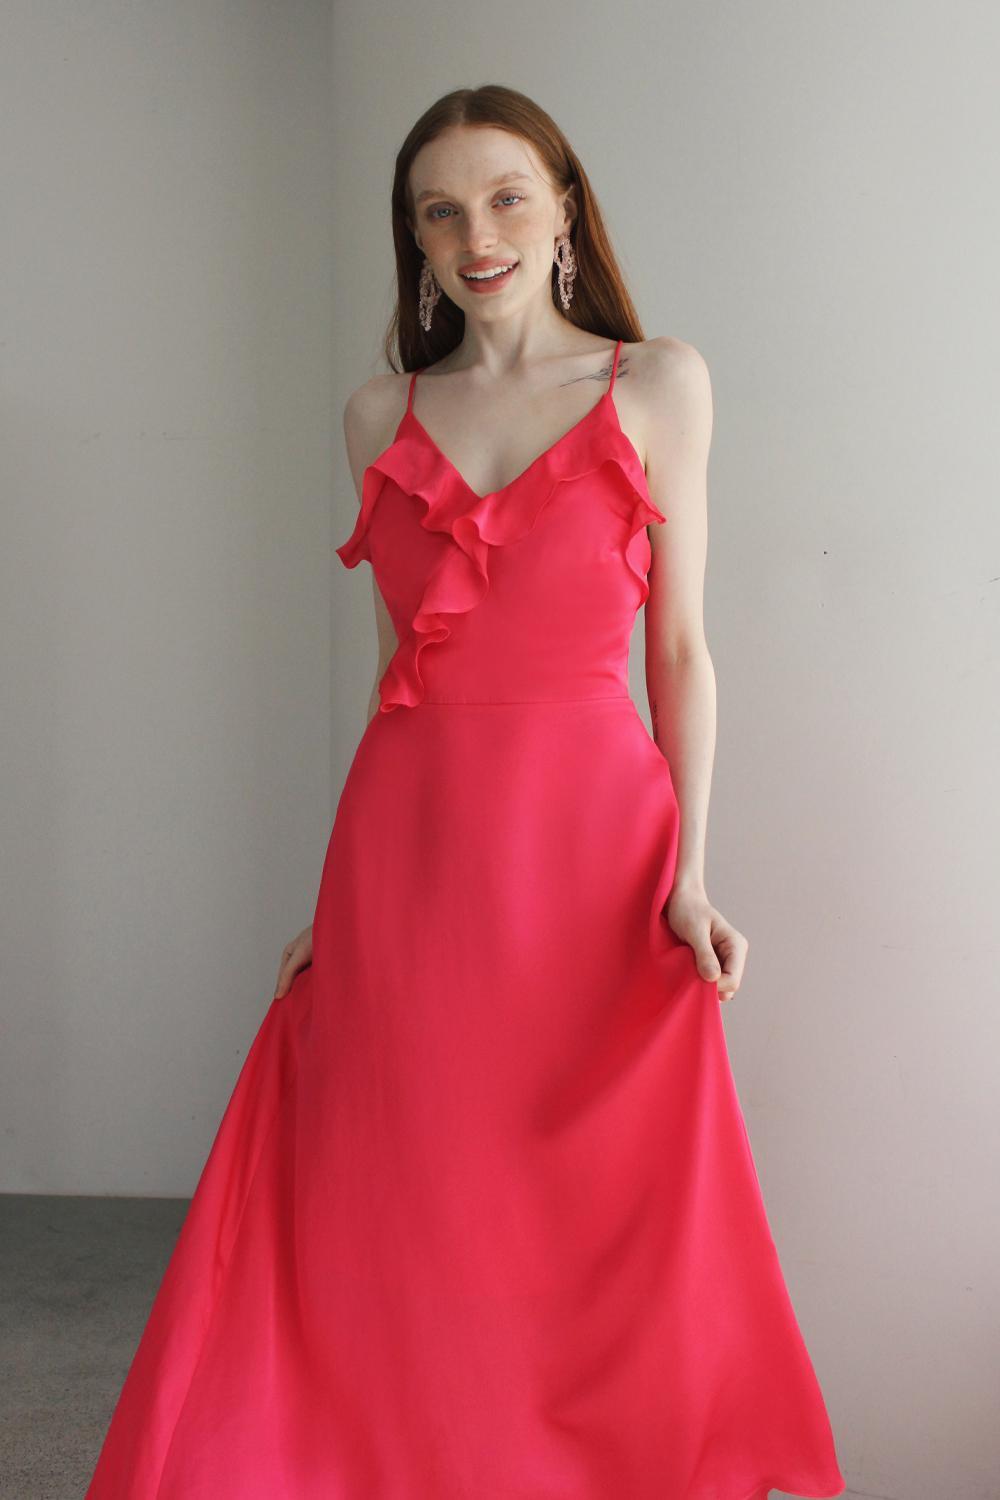 Alexis silky slip dress (Hot pink)